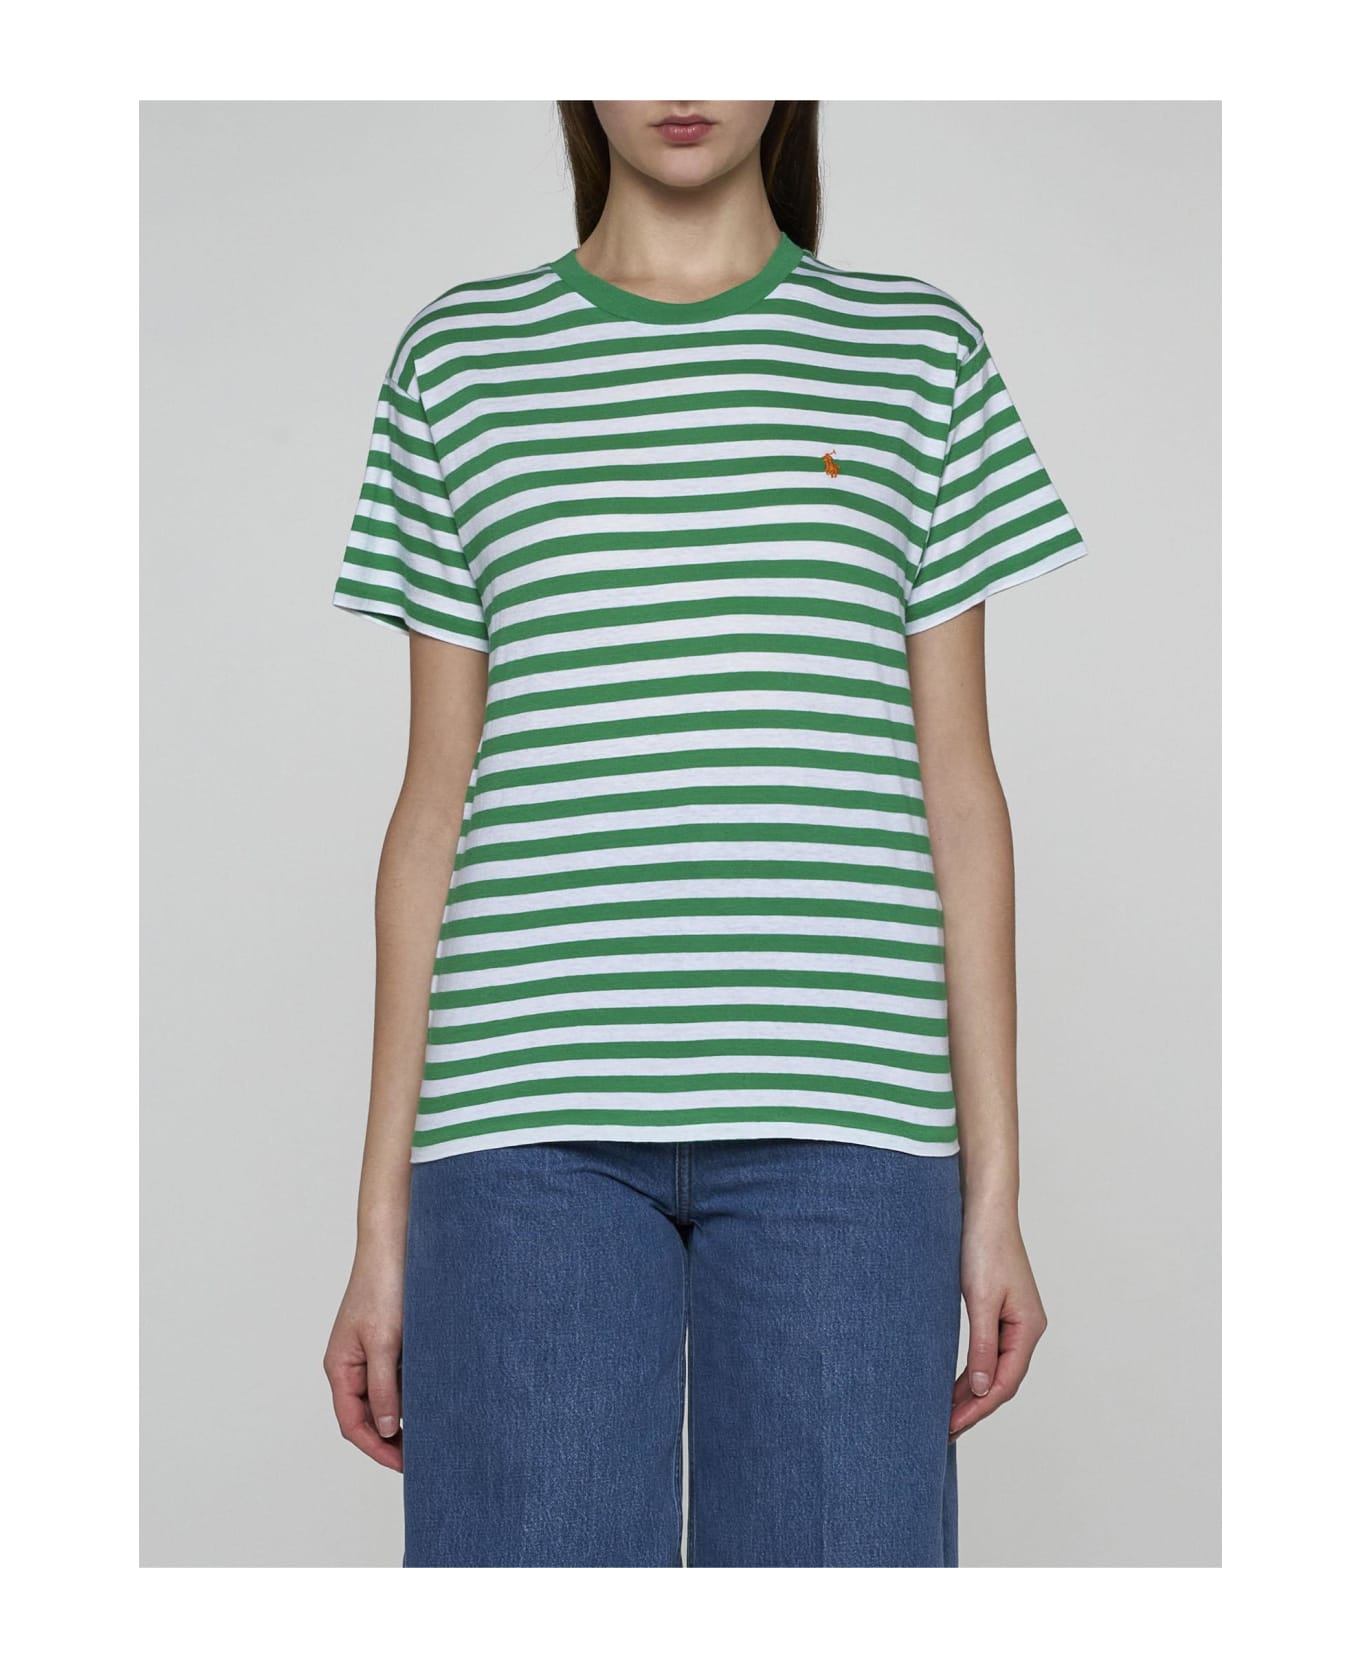 Polo Ralph Lauren Striped Cotton T-shirt - Green Tシャツ